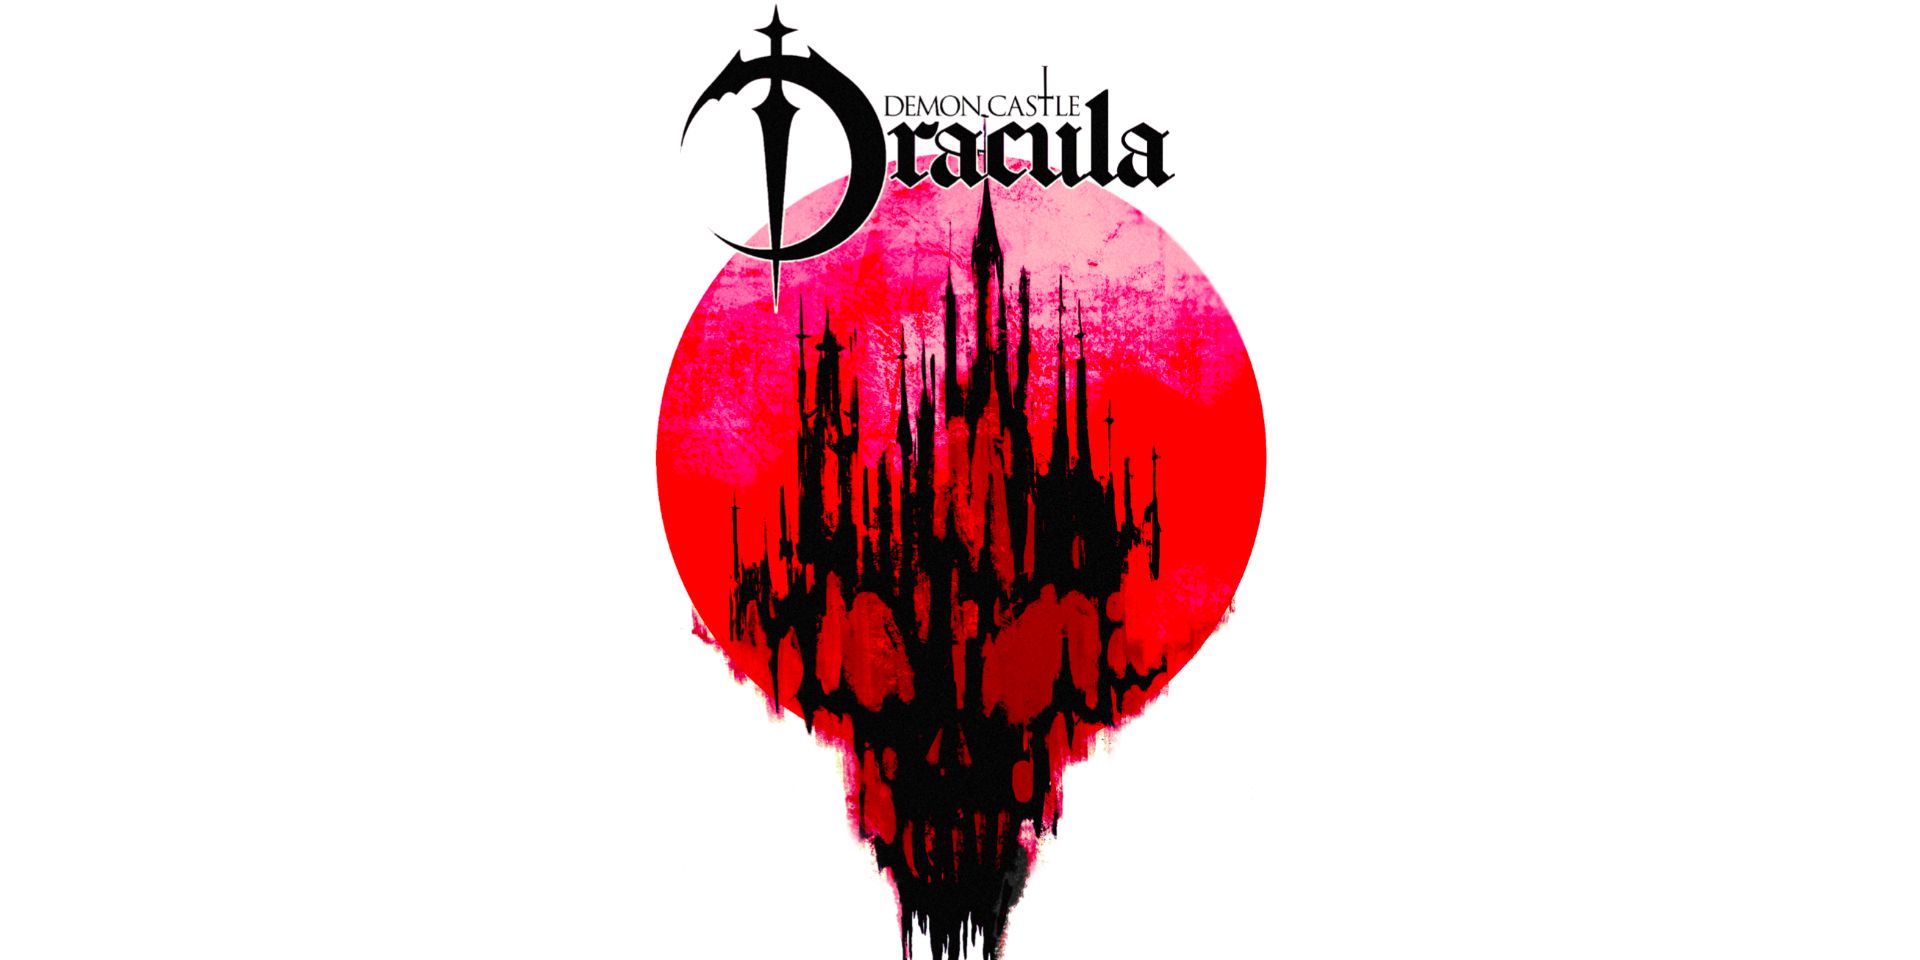 Castlevania Style RPG Demon Castle Dracula